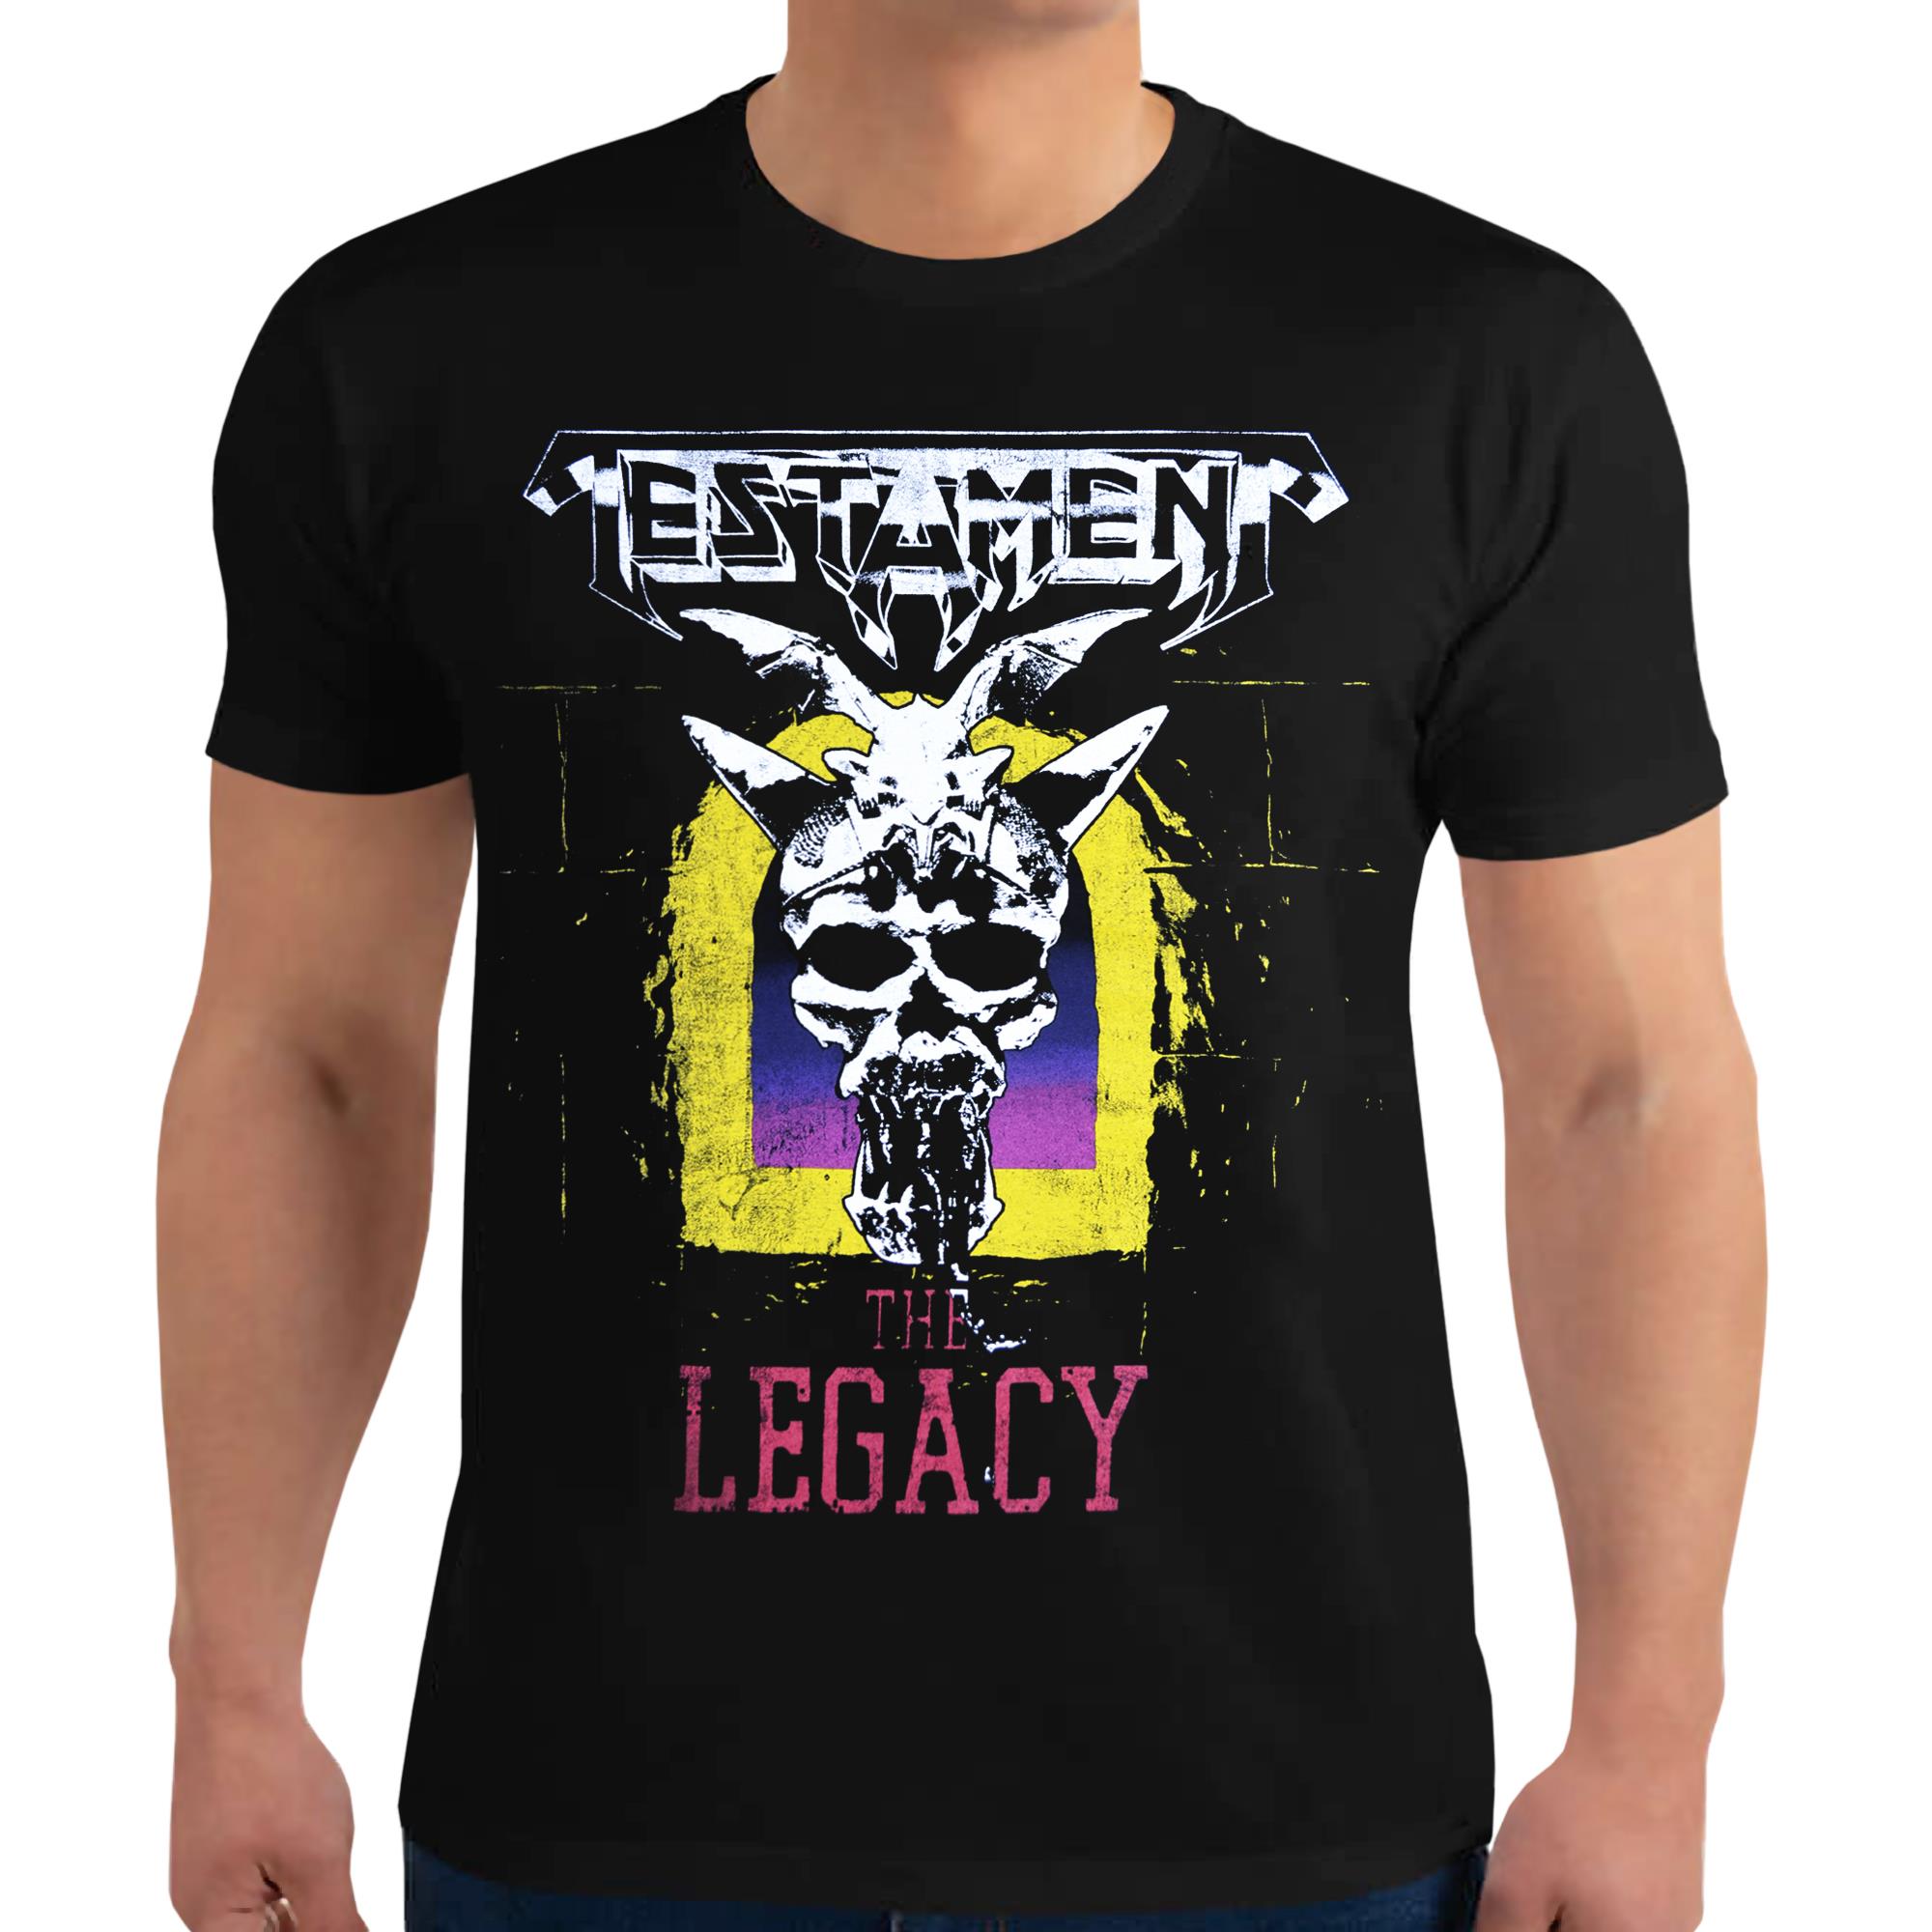 The Legacy T-Shirt